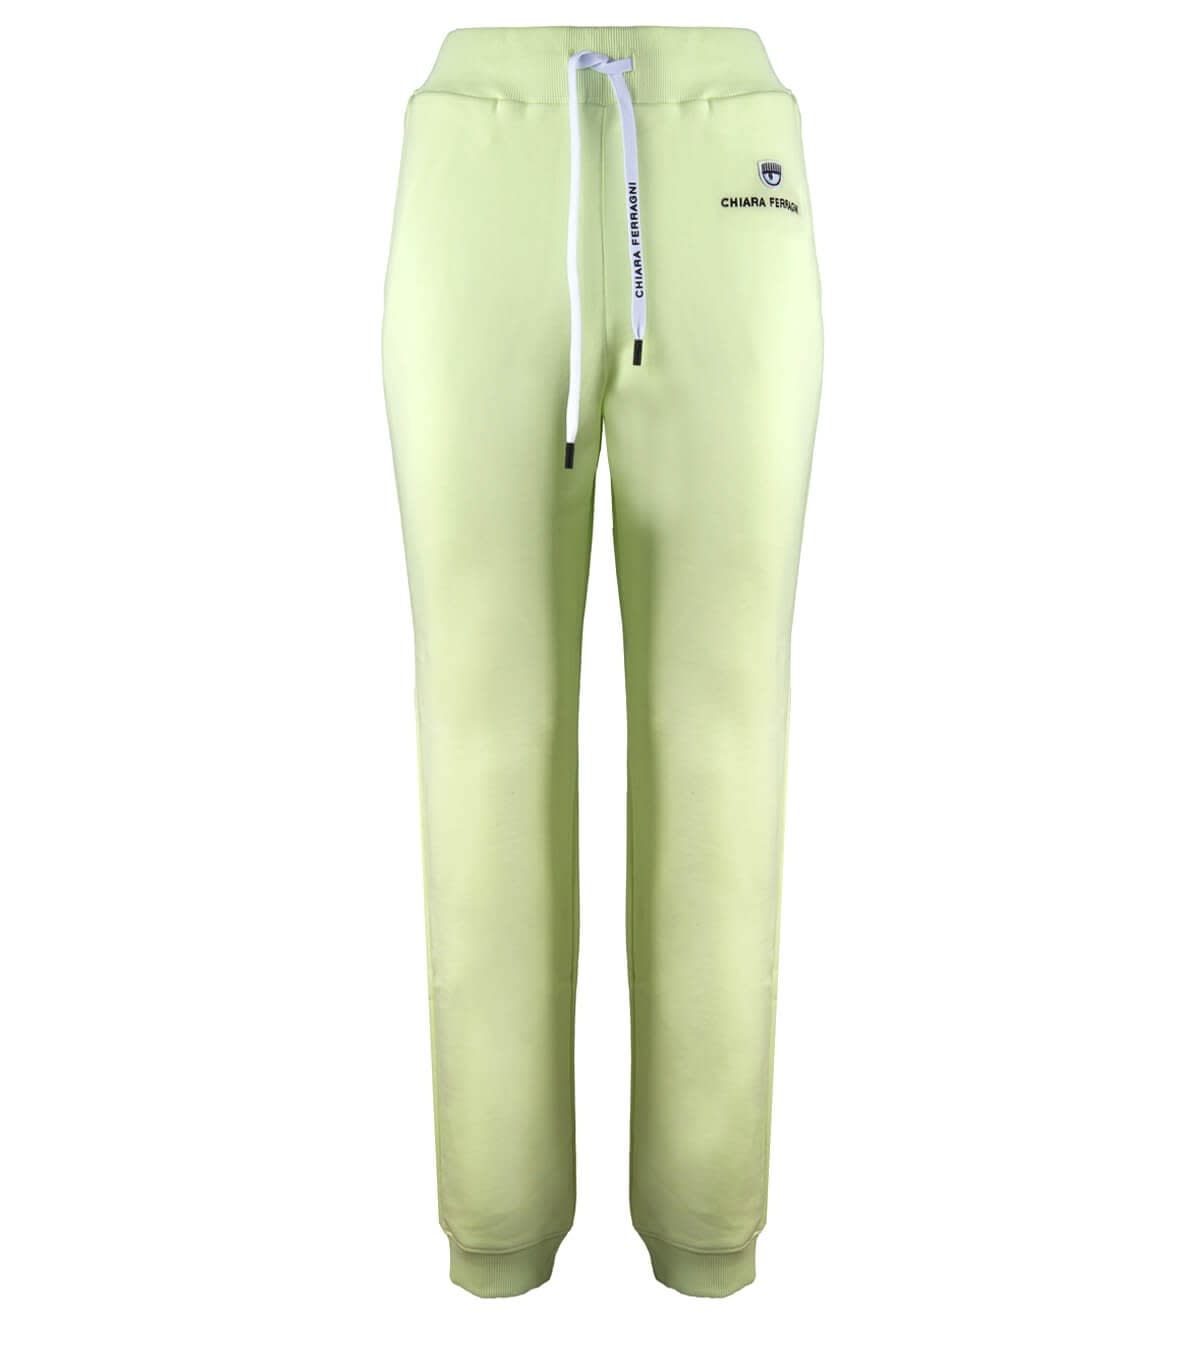 Chiara Ferragni Logo Classic Lime Green Sweatpants